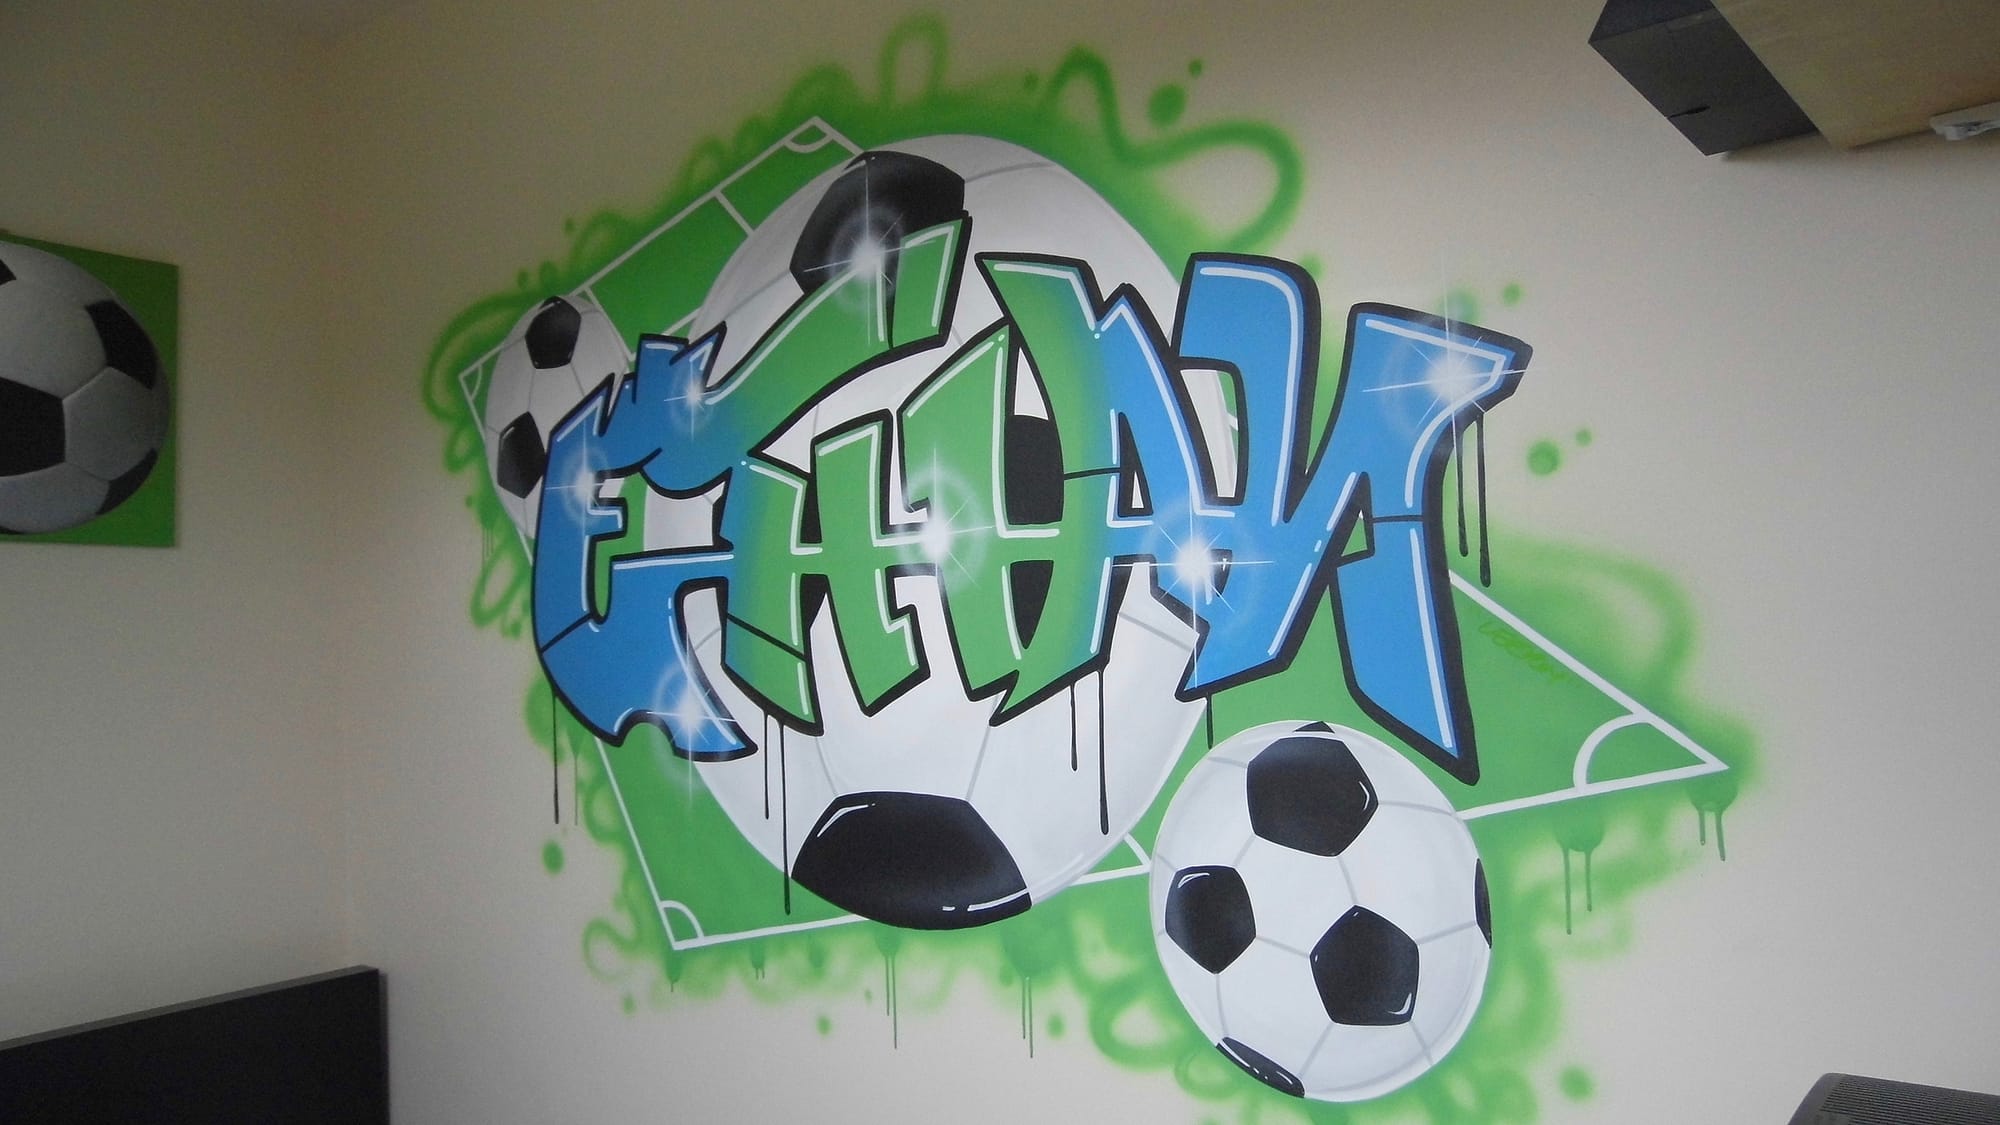 Ethan Graffiti boys bedroom decor mural Football